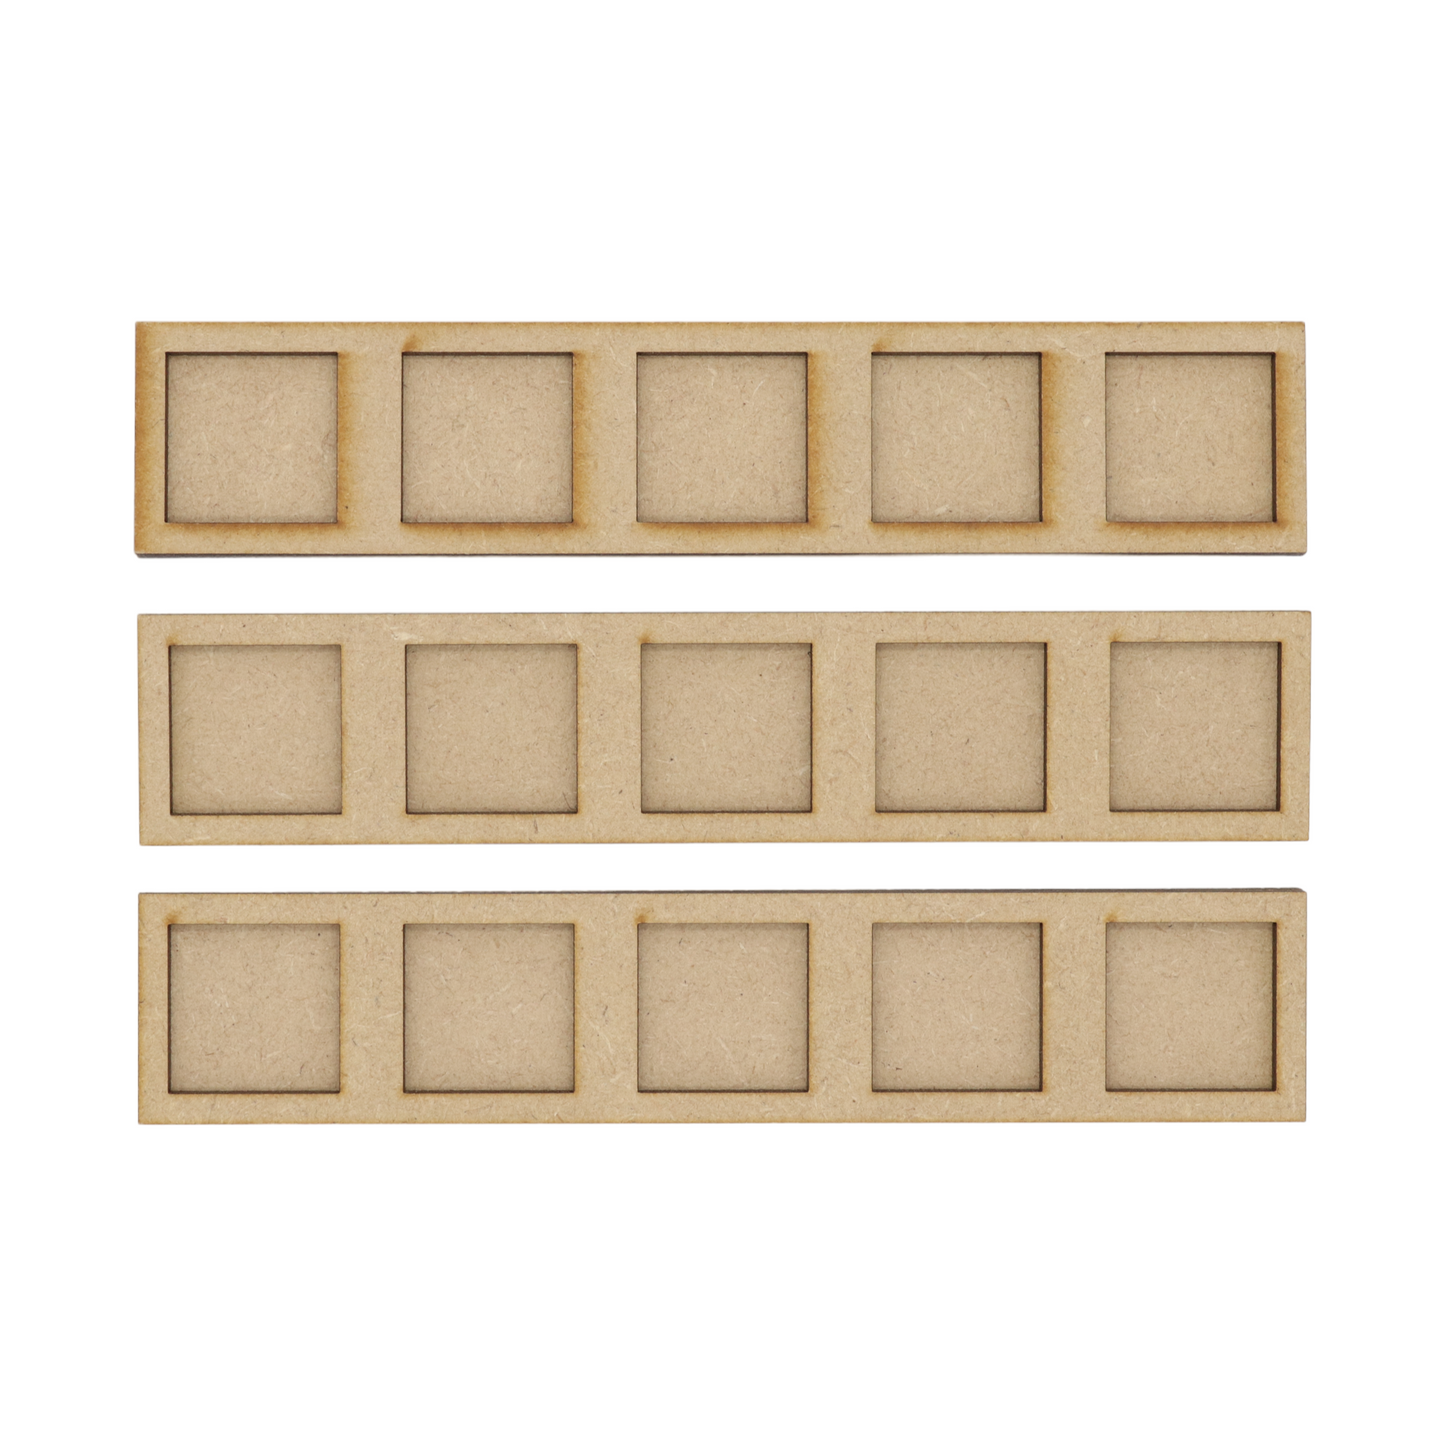 5x1 - 25mm Square Movement Tray